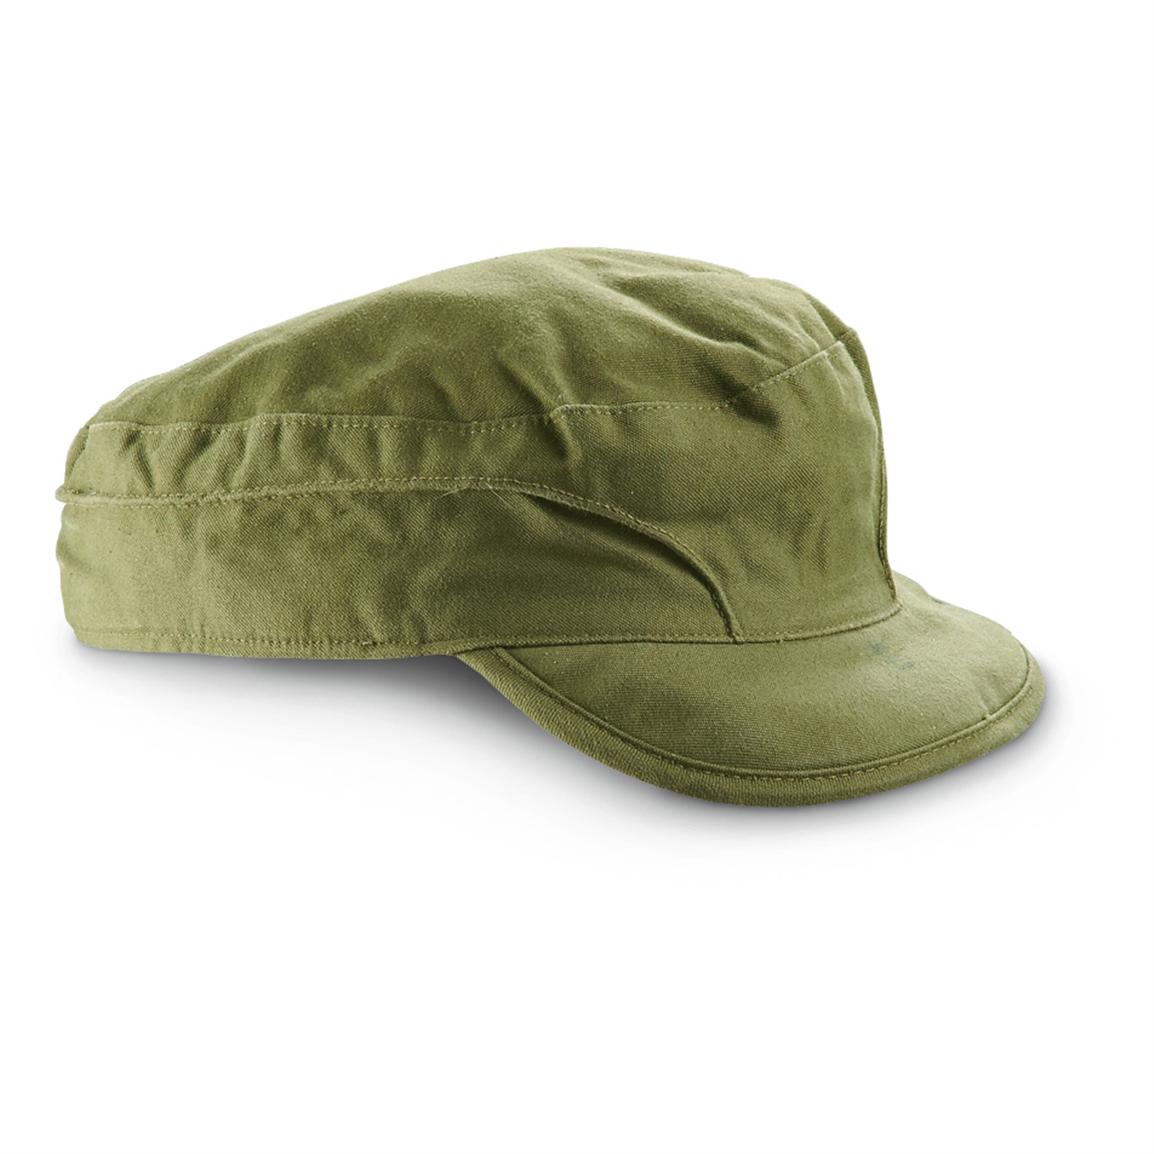 4 New Danish Military Surplus Field Caps Olive Drab 282244 Hats